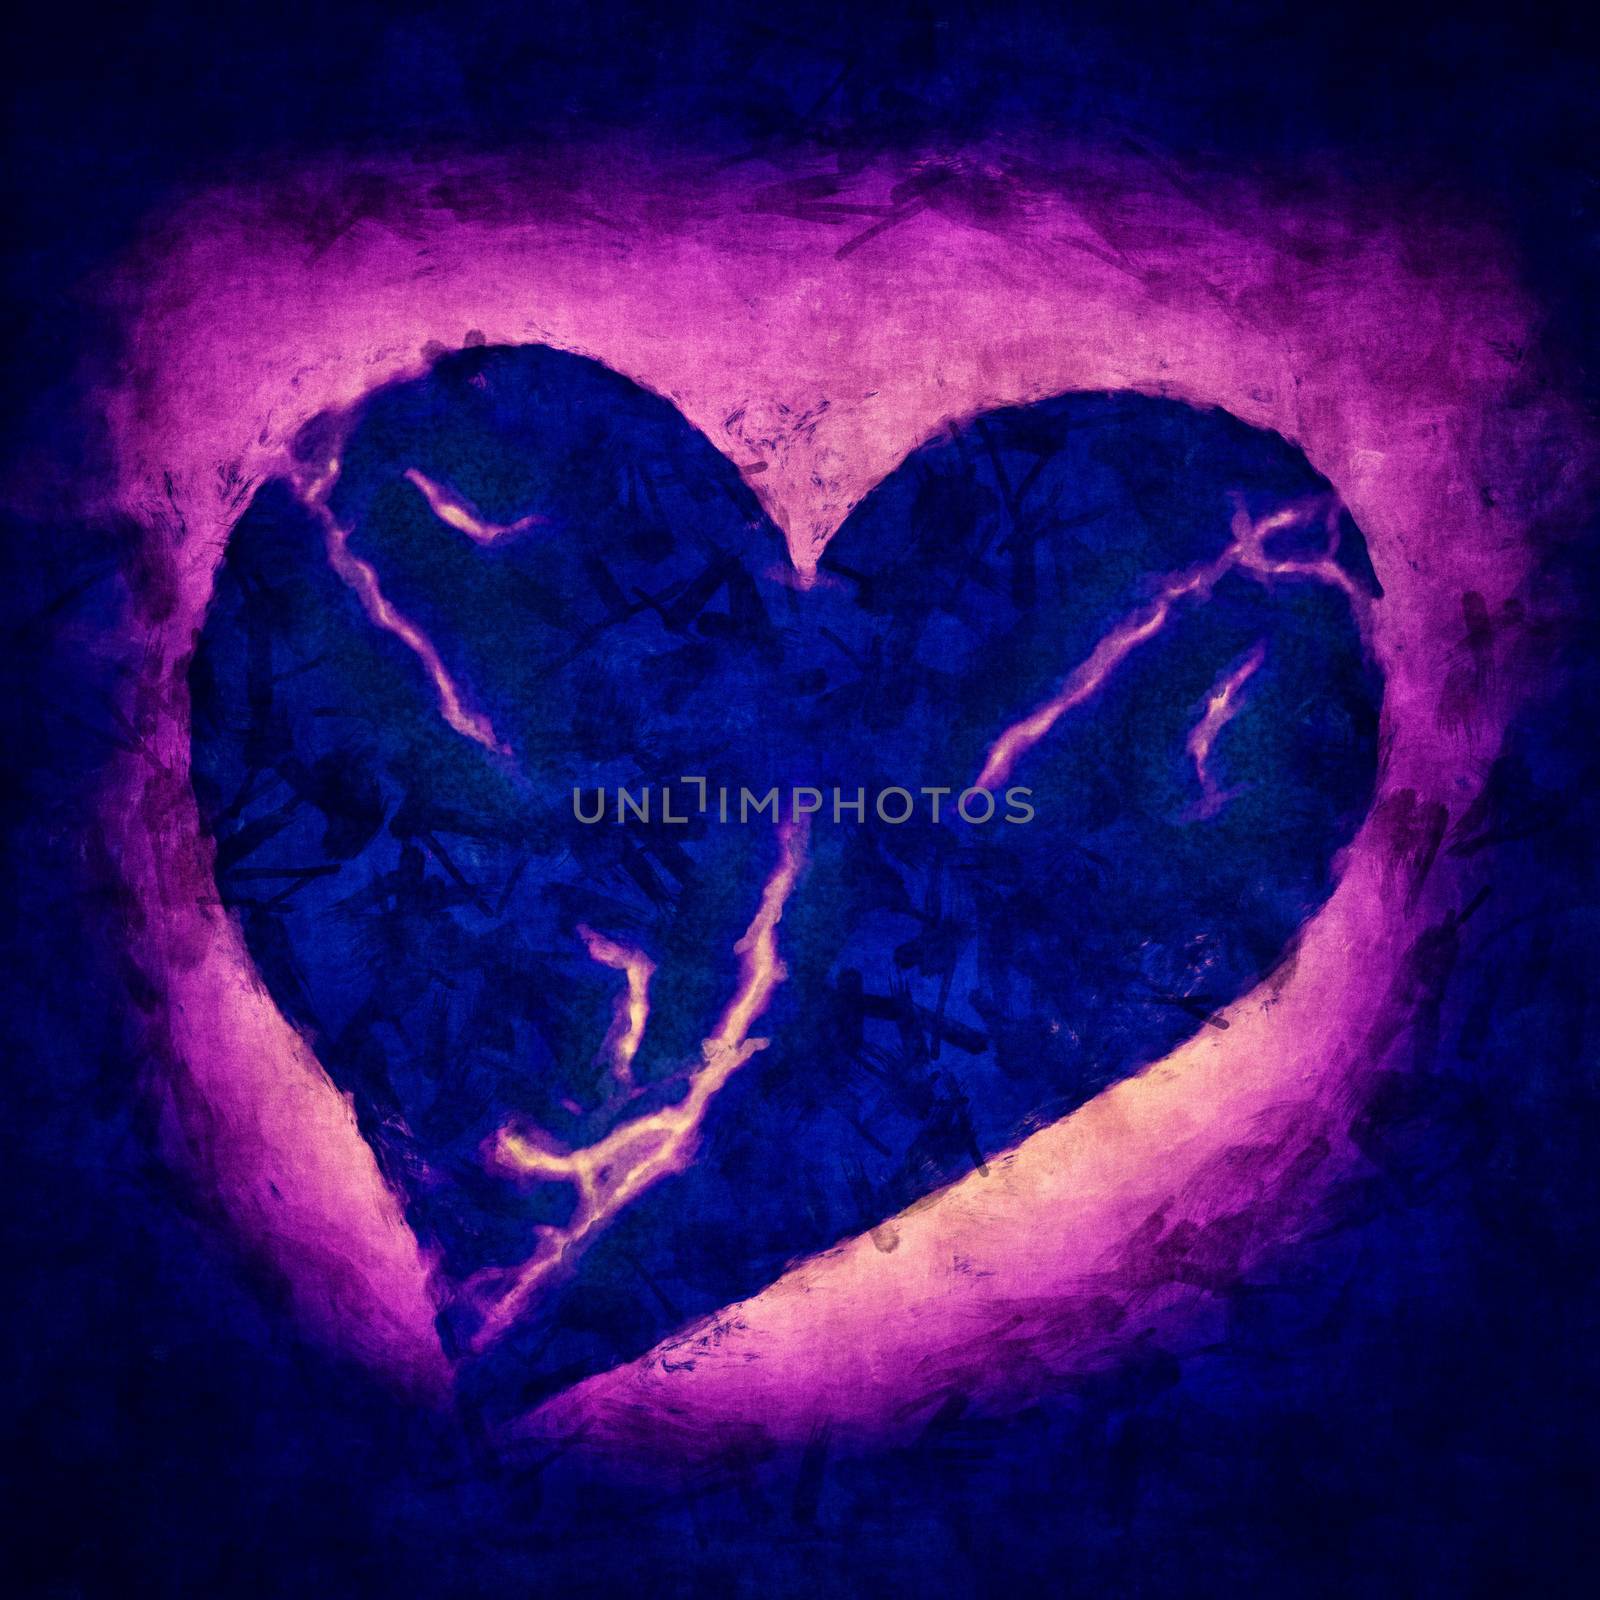 Dark Illustration of a sad dying heart